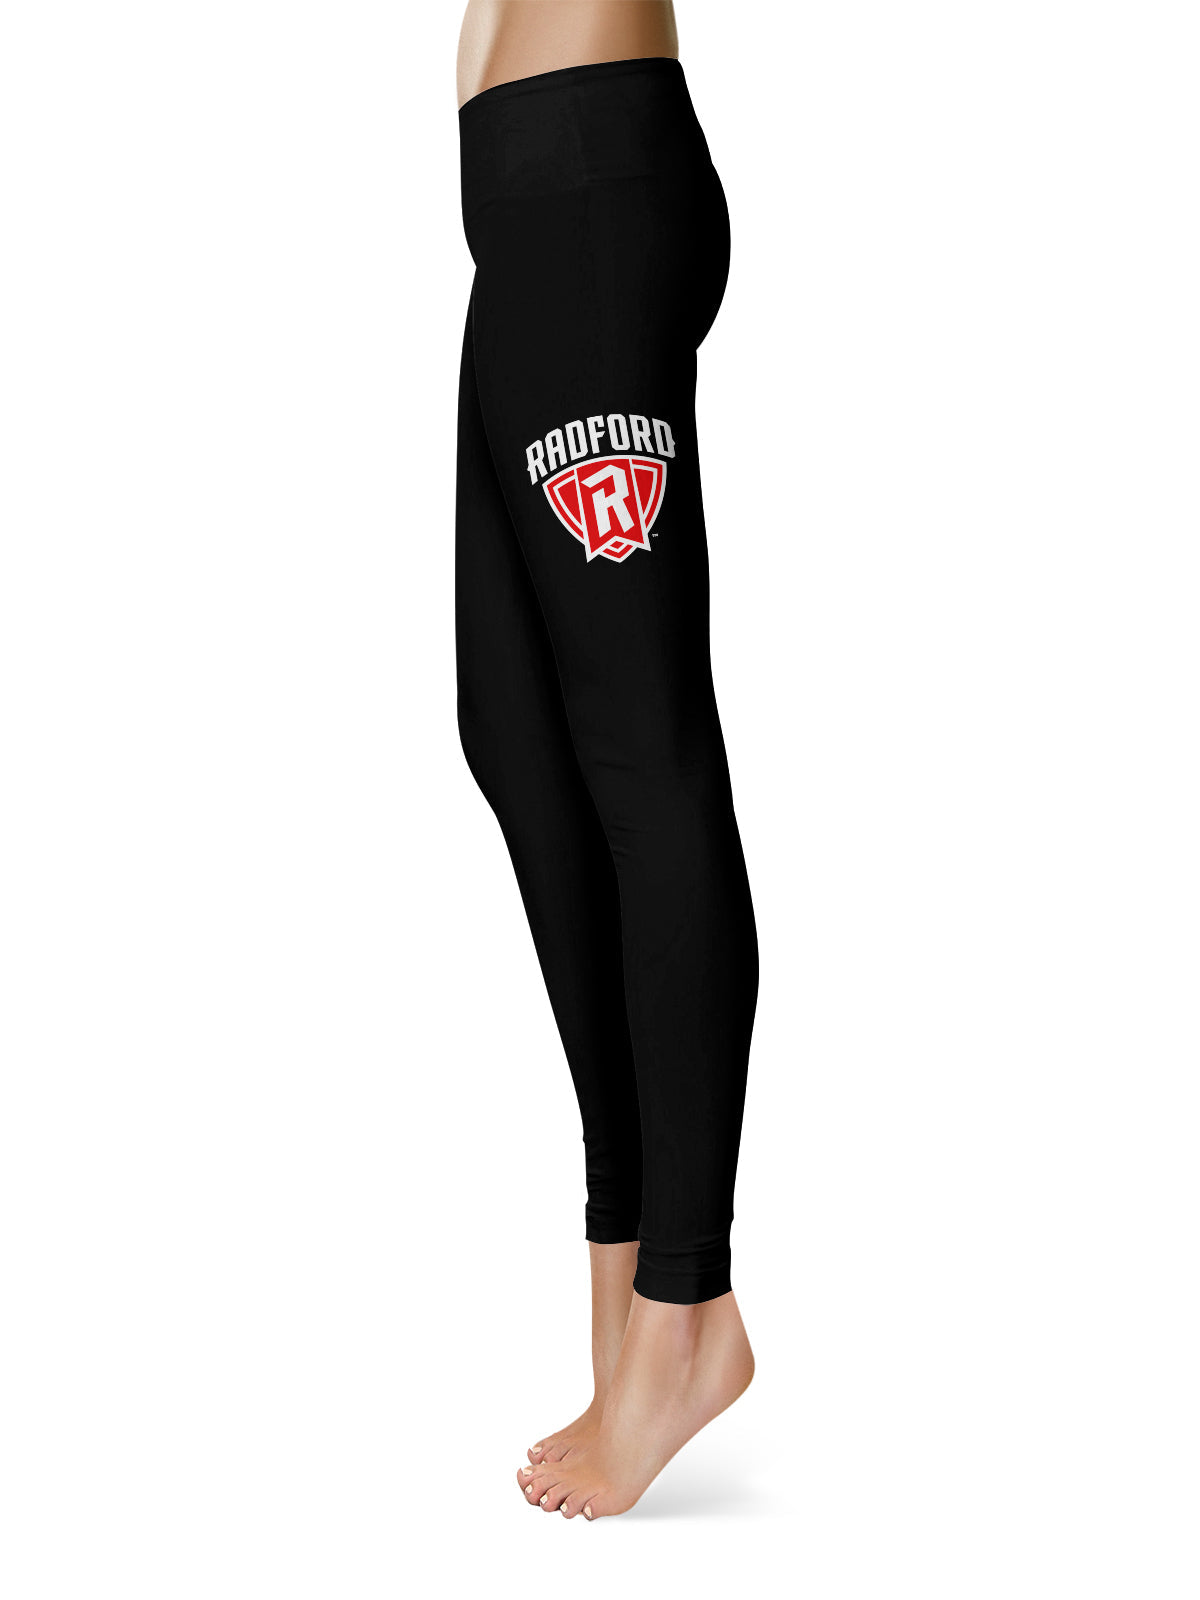 Radford Highlanders Vive La Fete Game Day Collegiate Large Logo on Thigh Women Black Yoga Leggings 2.5 Waist Tights